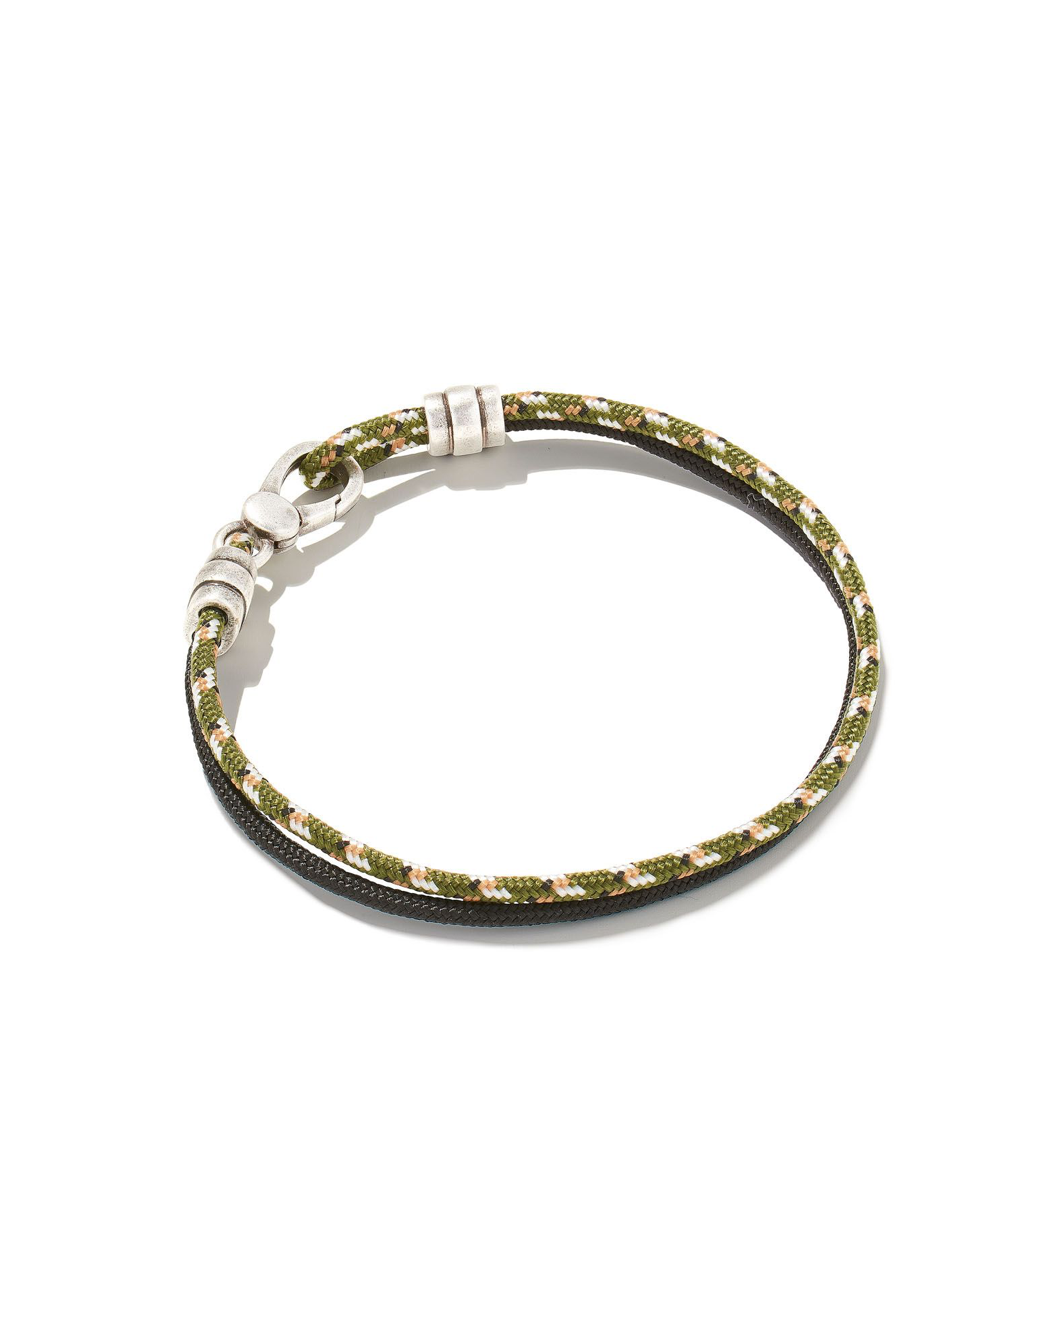 Kenneth Oxidized Sterling Silver Corded Bracelet in Olive Black